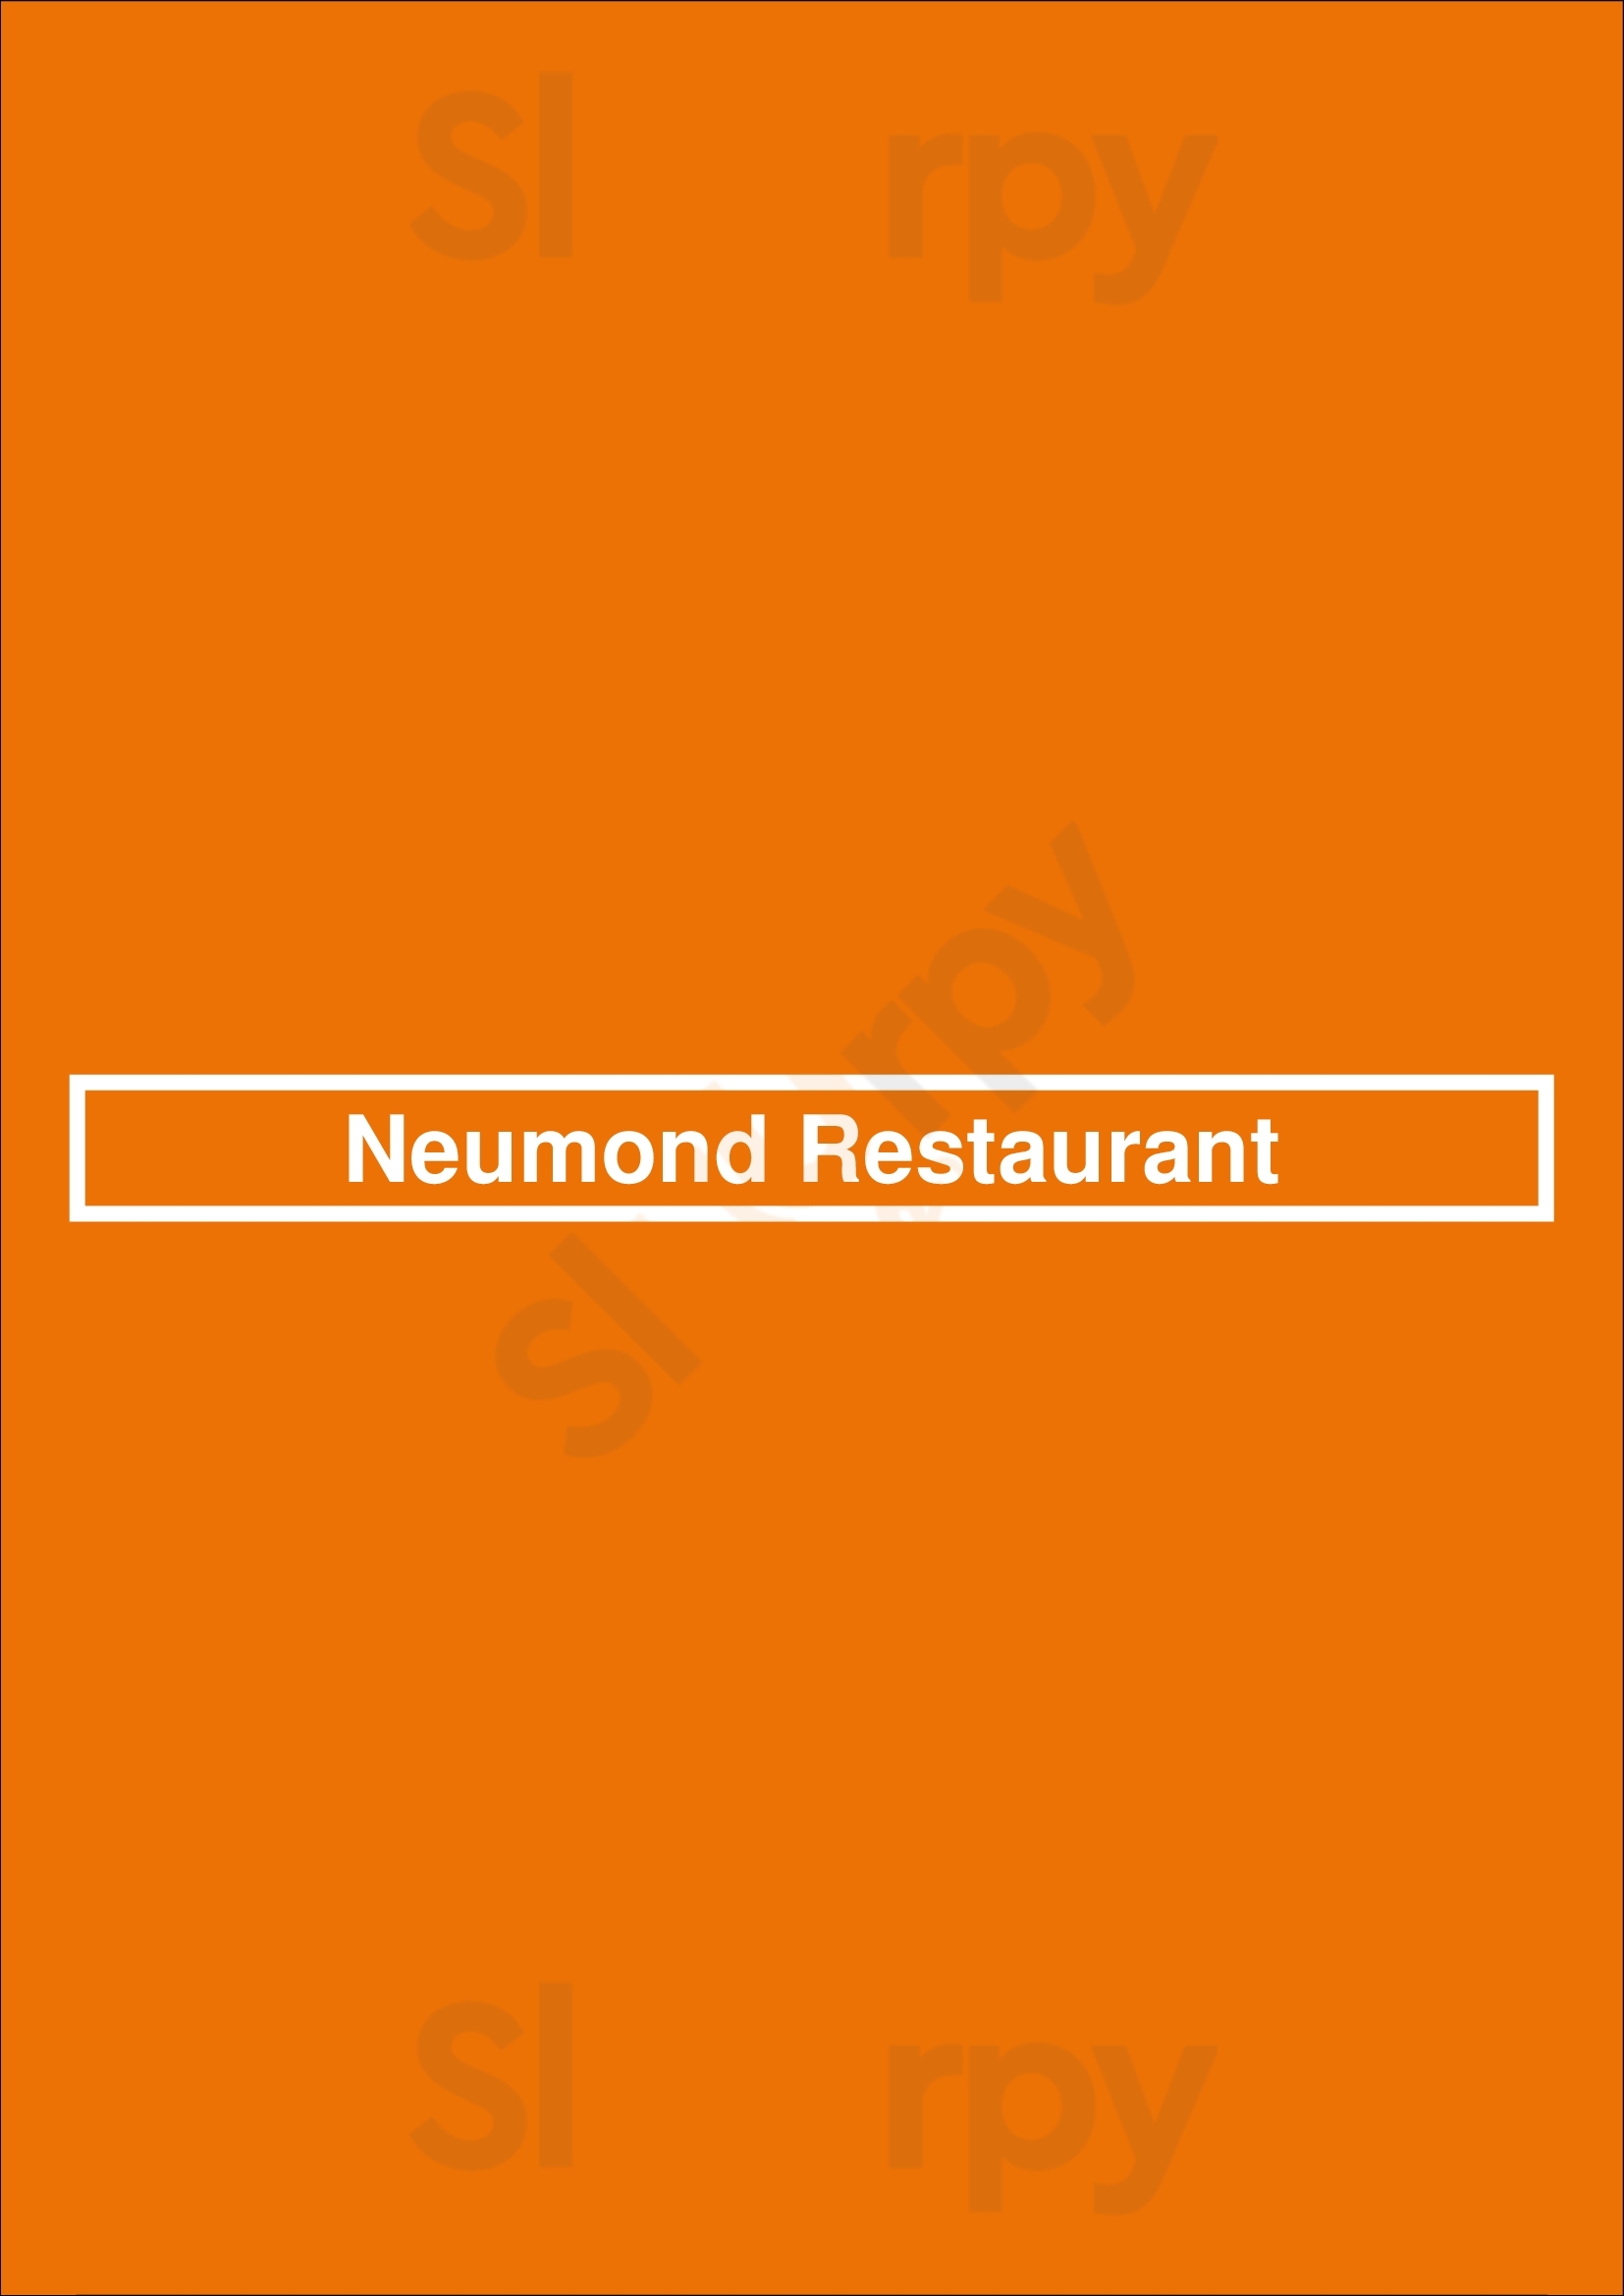 Neumond Restaurant Berlin Menu - 1